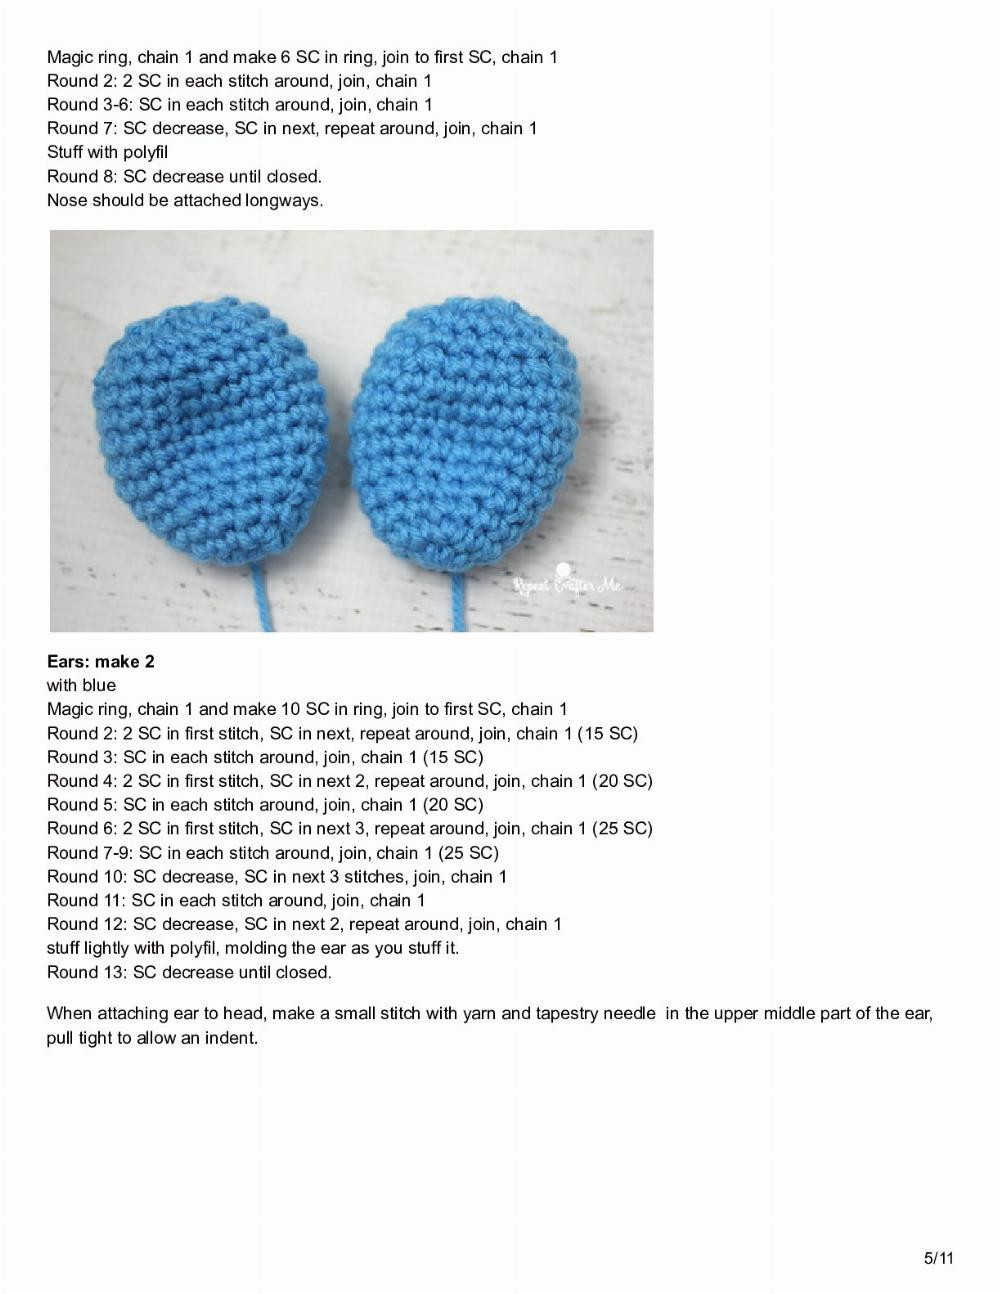 crochet brainy smurf glasses holder crochet pattern